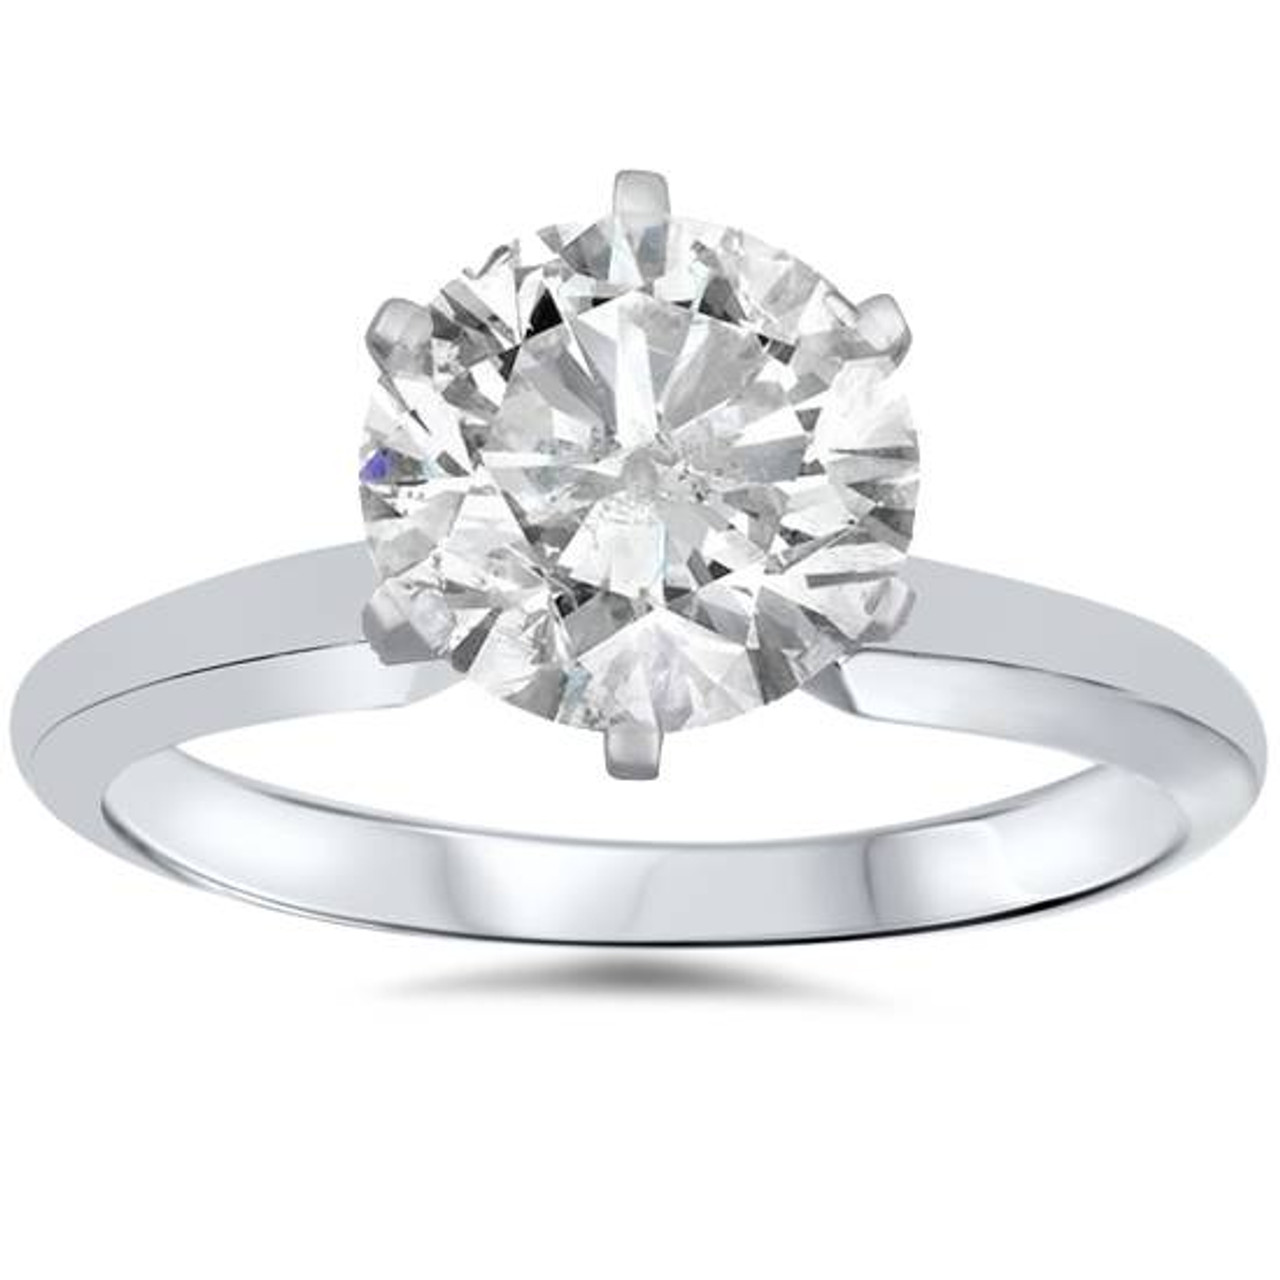 Pompeii3 1/2ct Round Solitaire Diamond Engagement Ring 14K White Gold Enhanced - Size 8.5